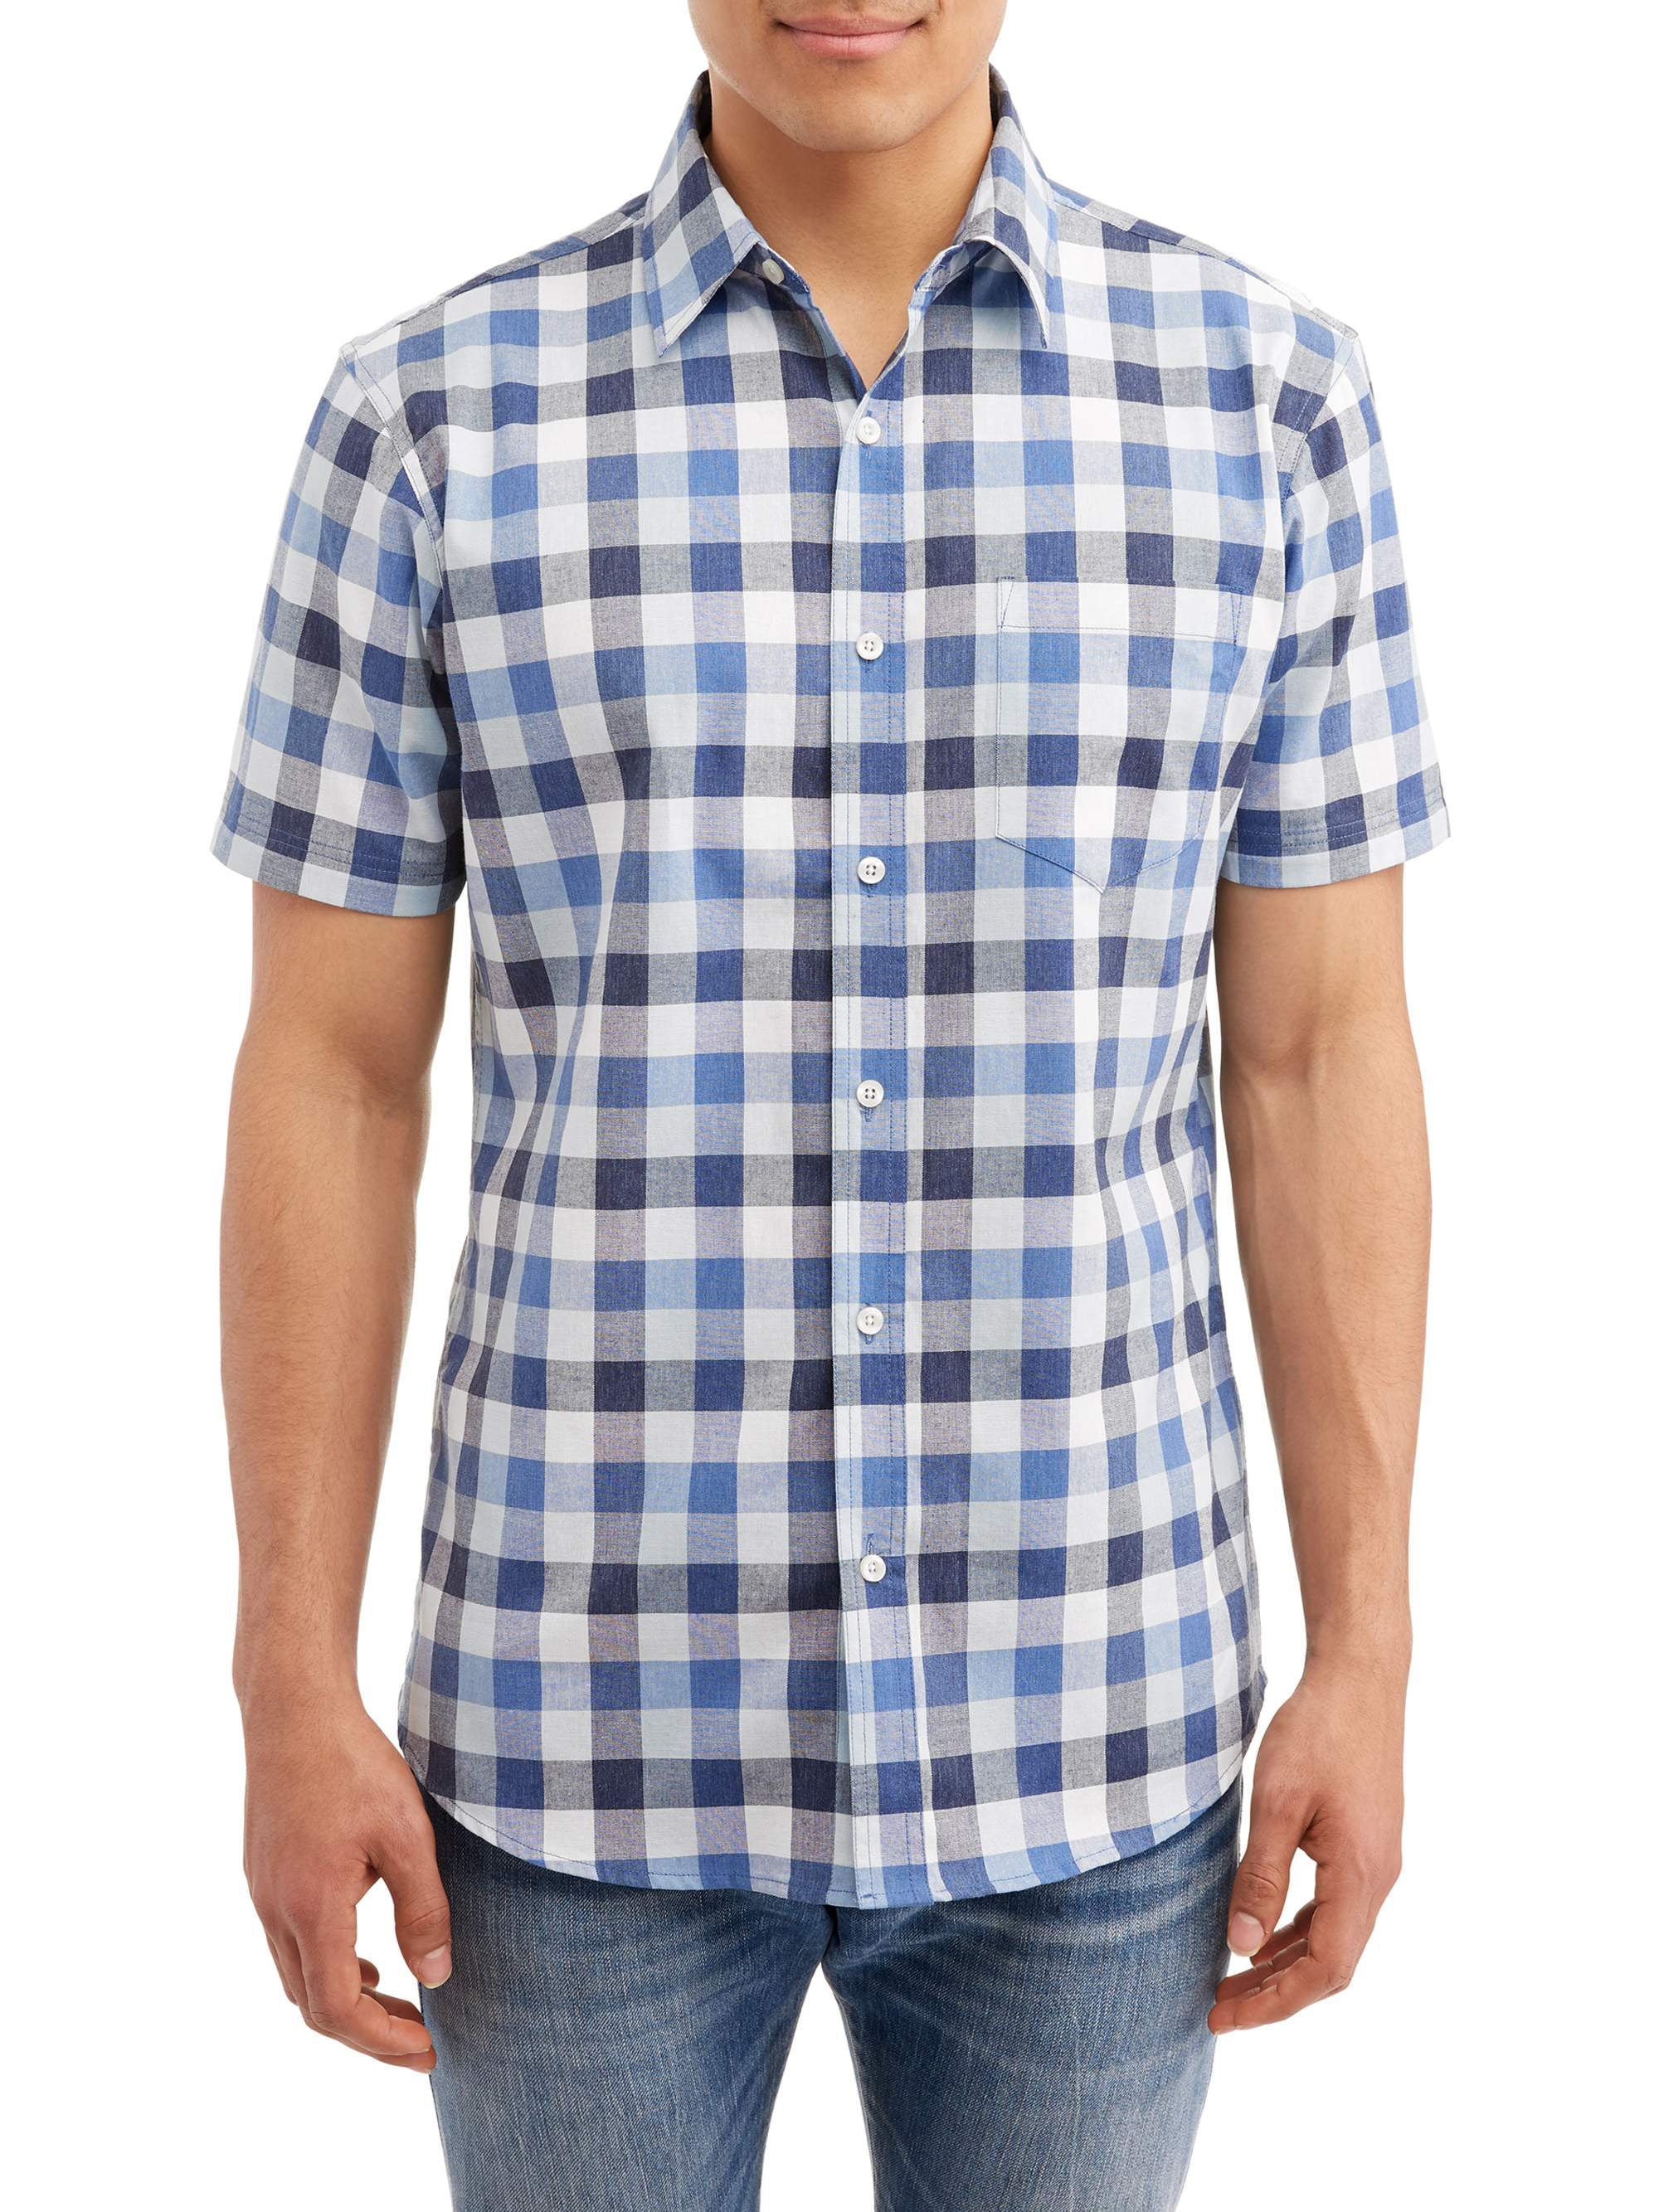 YYear Mens Button Up Printed Casual Stretch Shirt Plaid Print Plus Size Shirt 